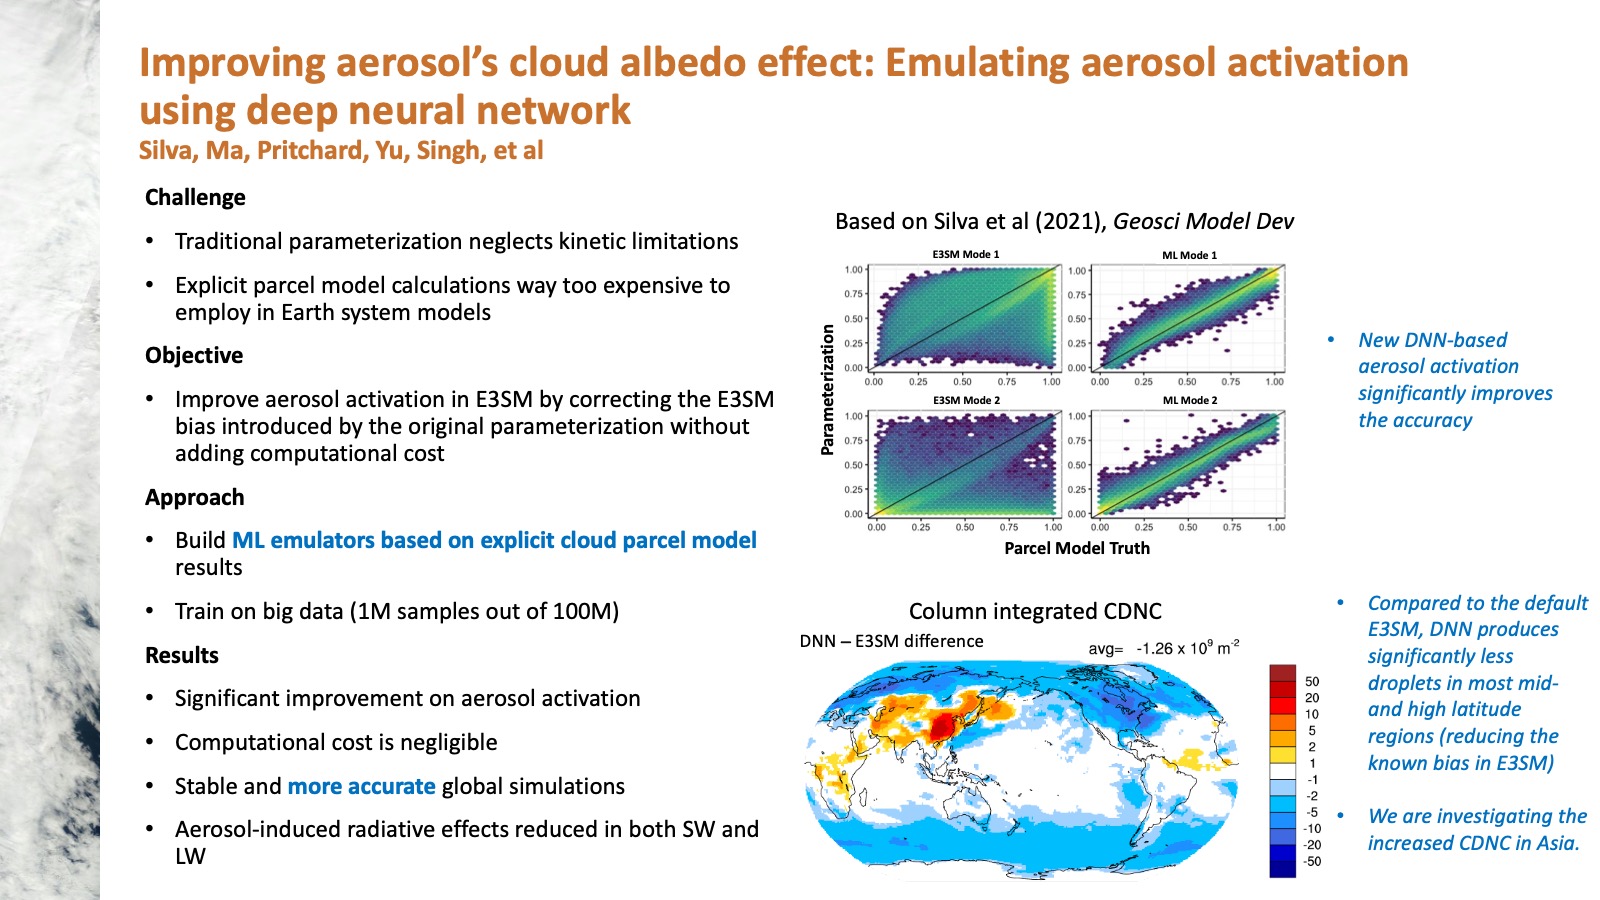 Improving aerosol’s cloud lifetime effects: Emulating warm rain initiation using deep neural network